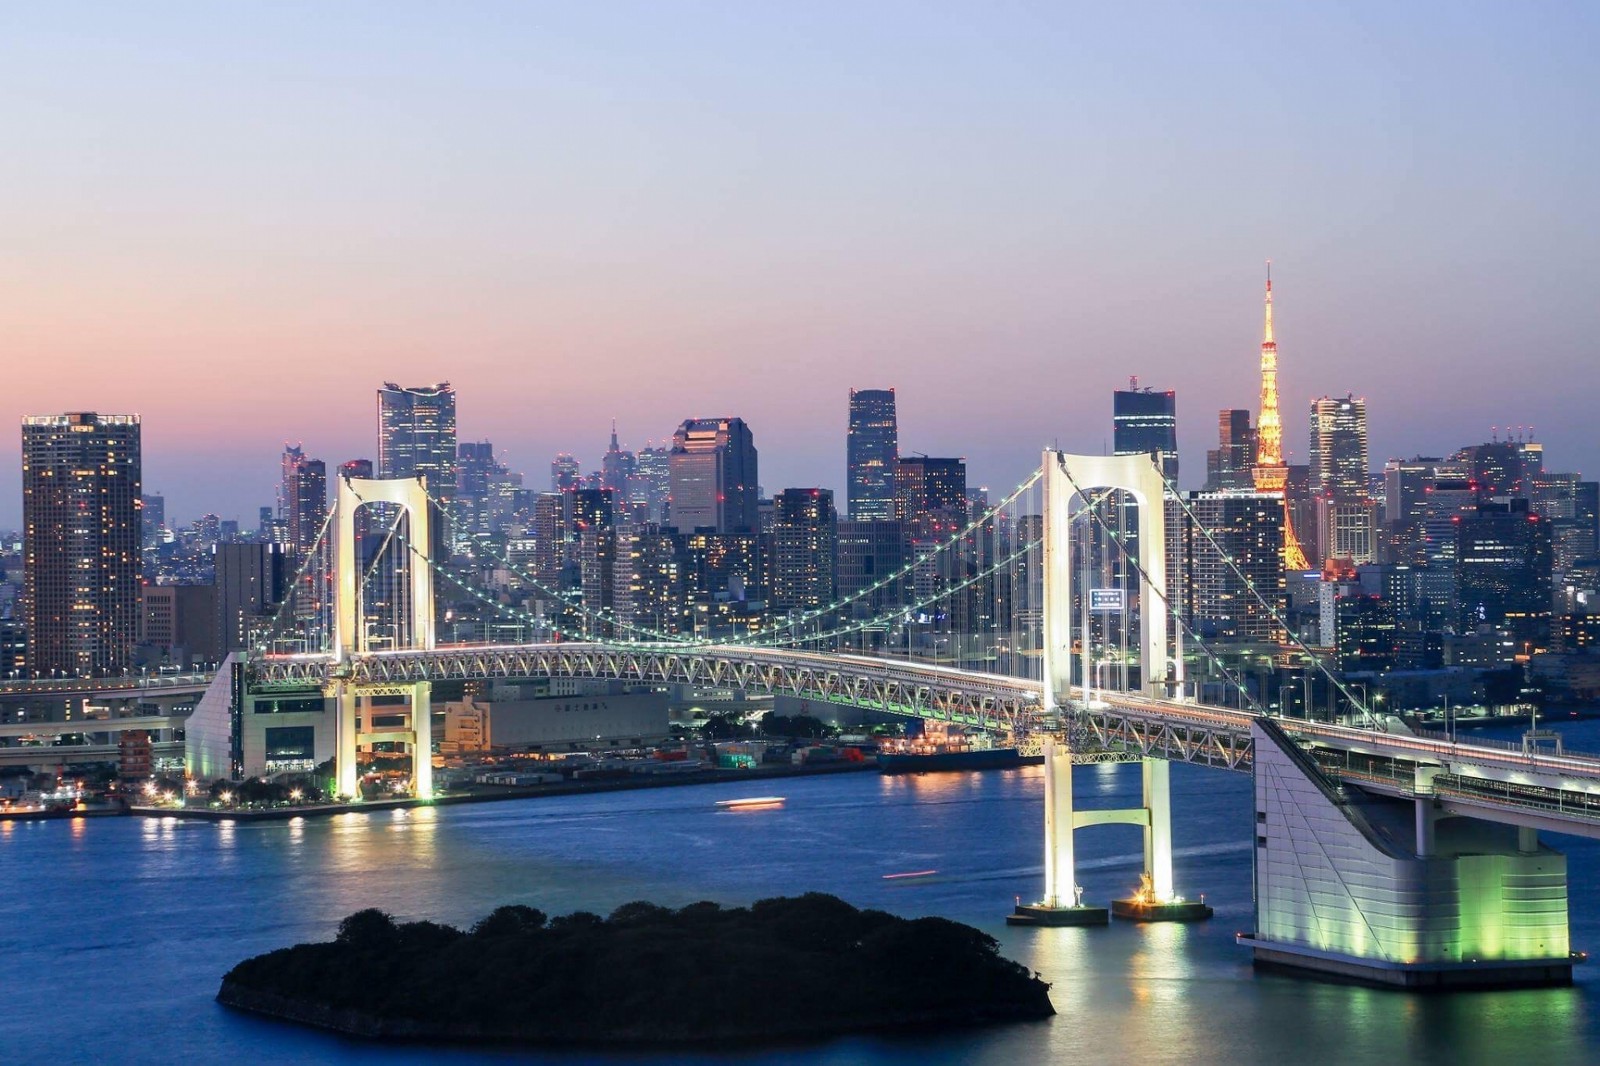 Rainbow Bridge and the city center of Tokyo gazed from Odaiba